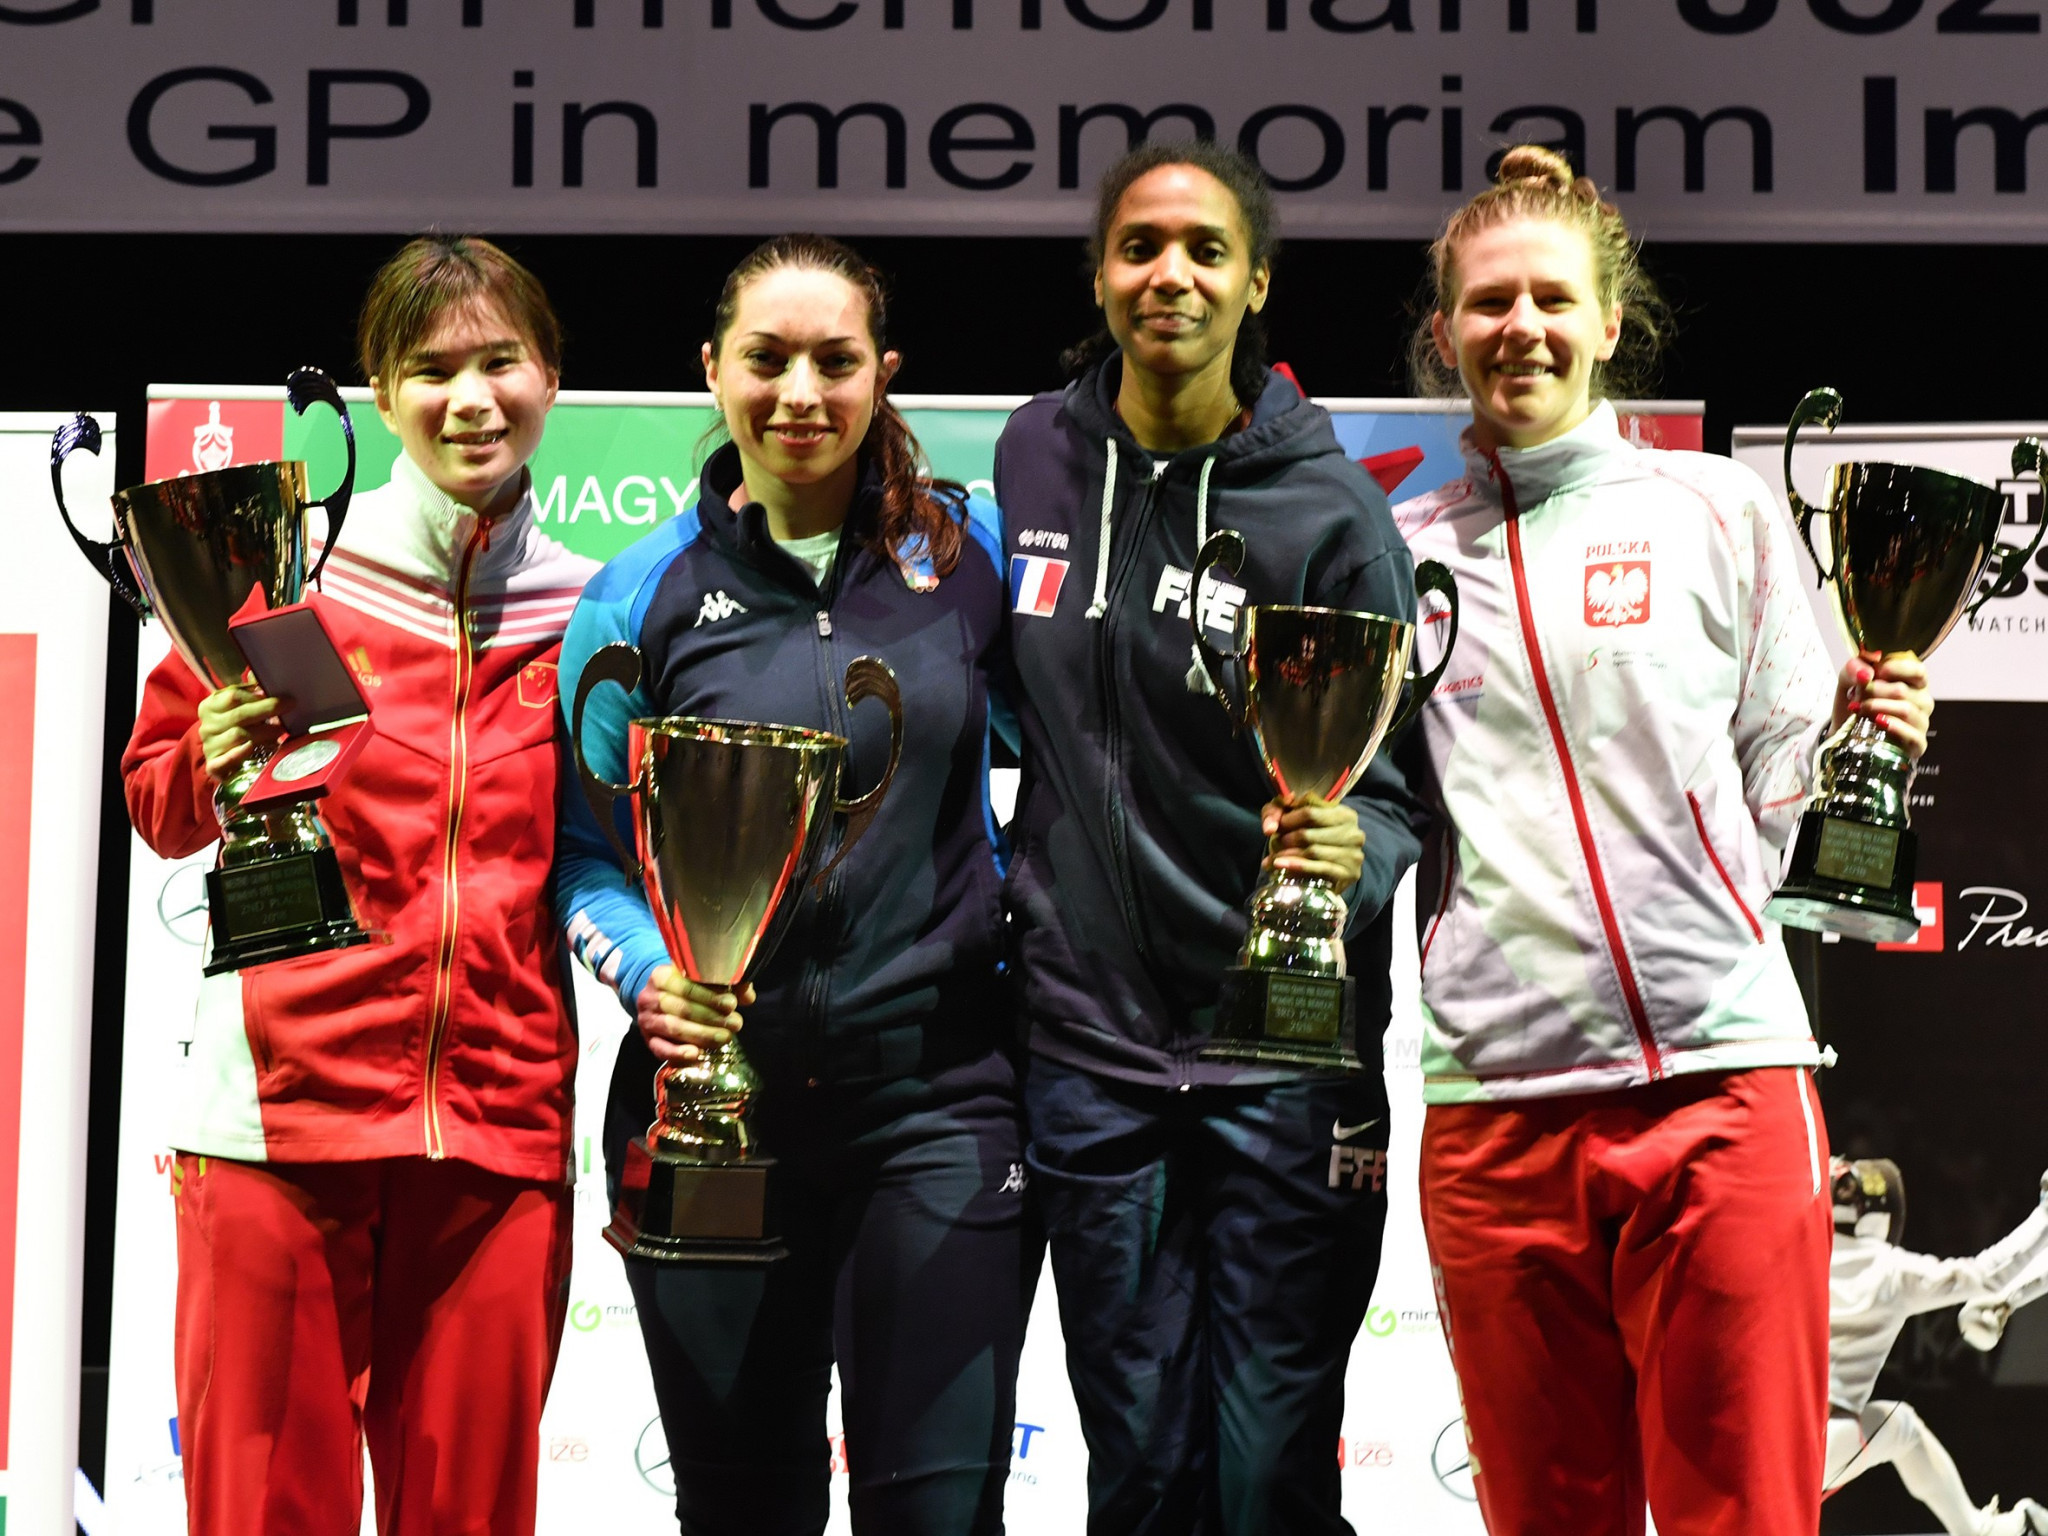 Mara Navarria of Italy, second left, won the women's title ©FIE